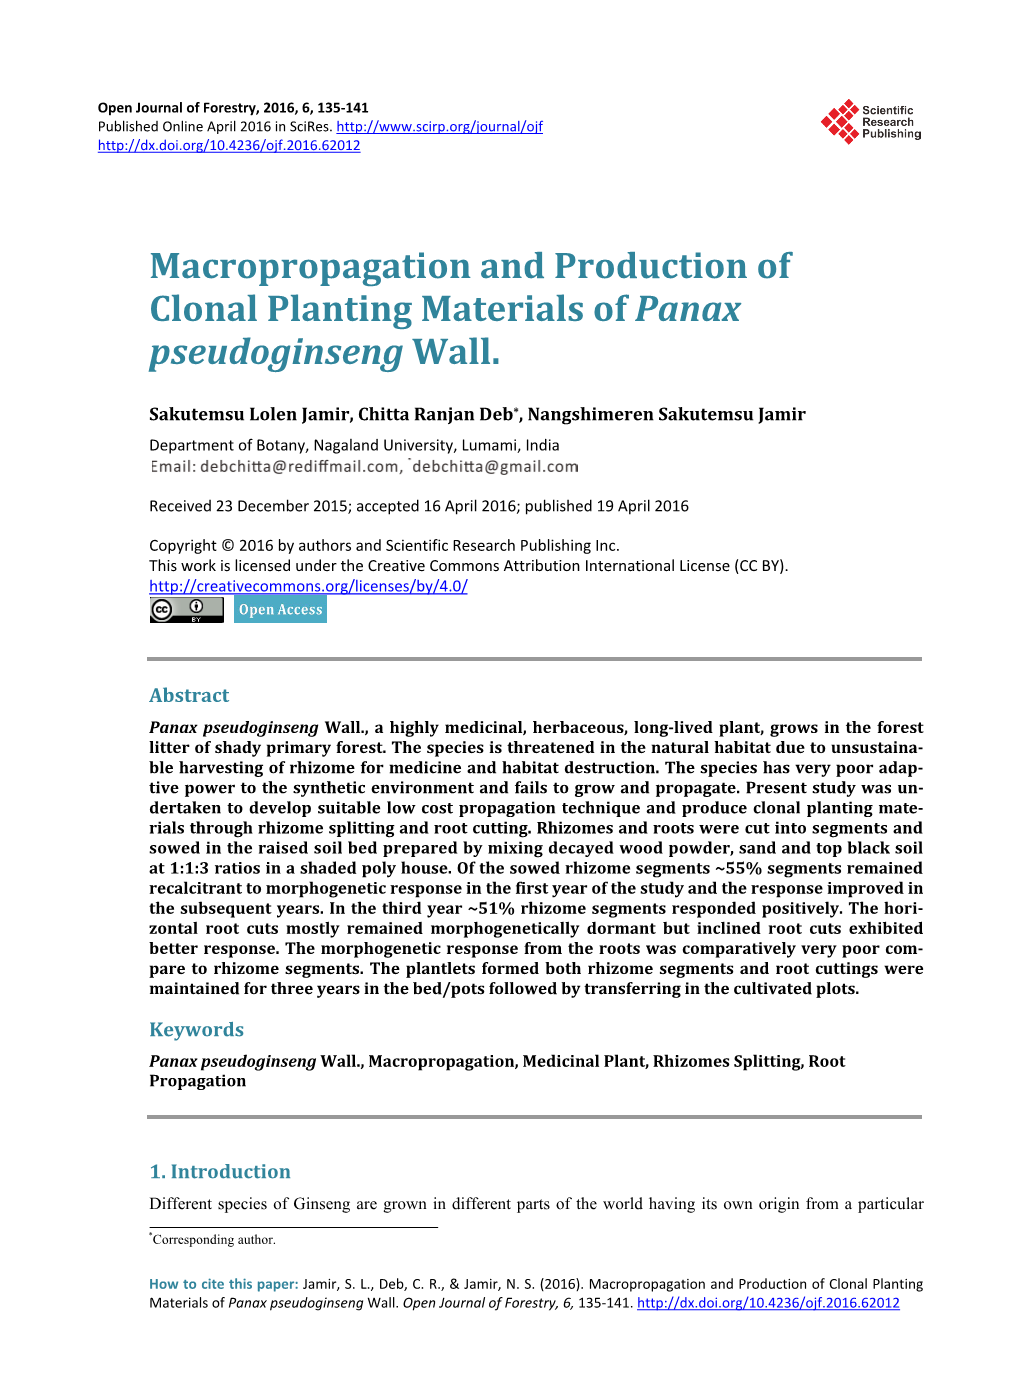 Macropropagation and Production of Clonal Planting Materials of Panax Pseudoginseng Wall